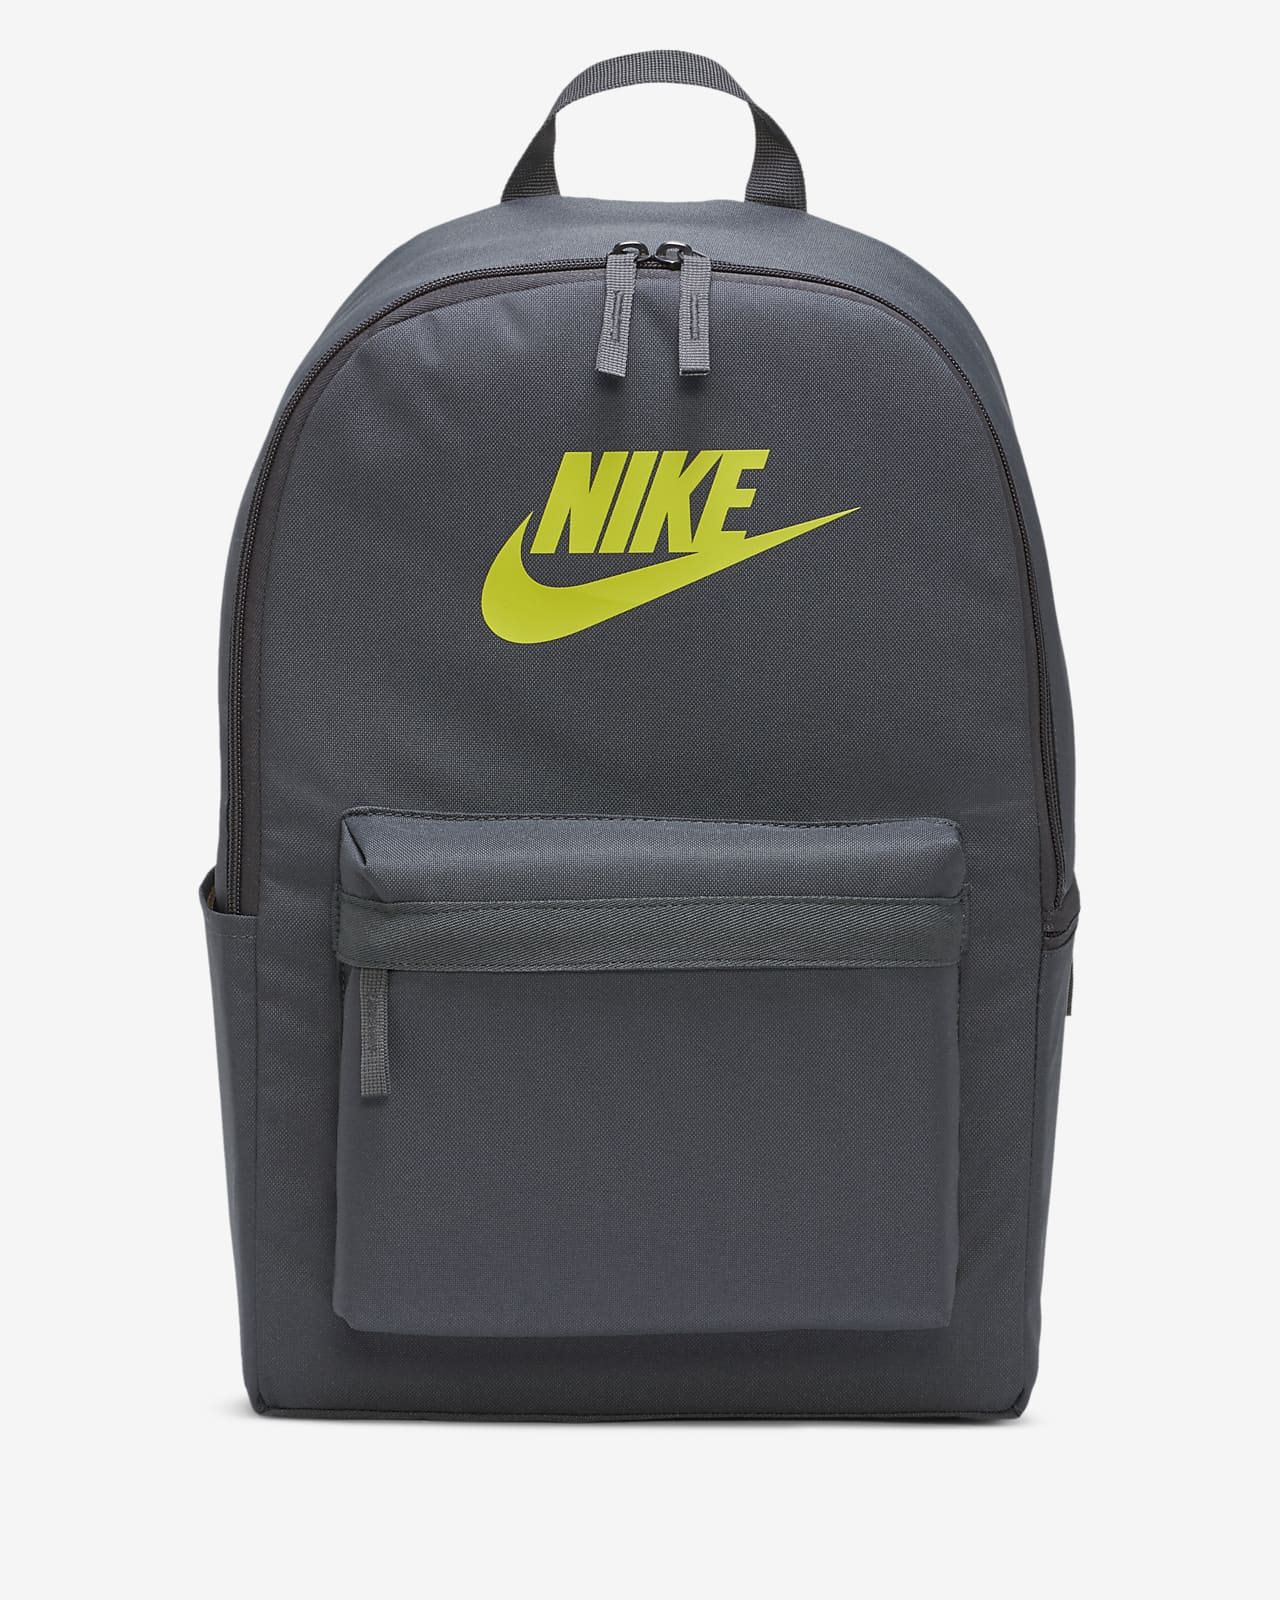 nike heritage 2.0 backpack gold